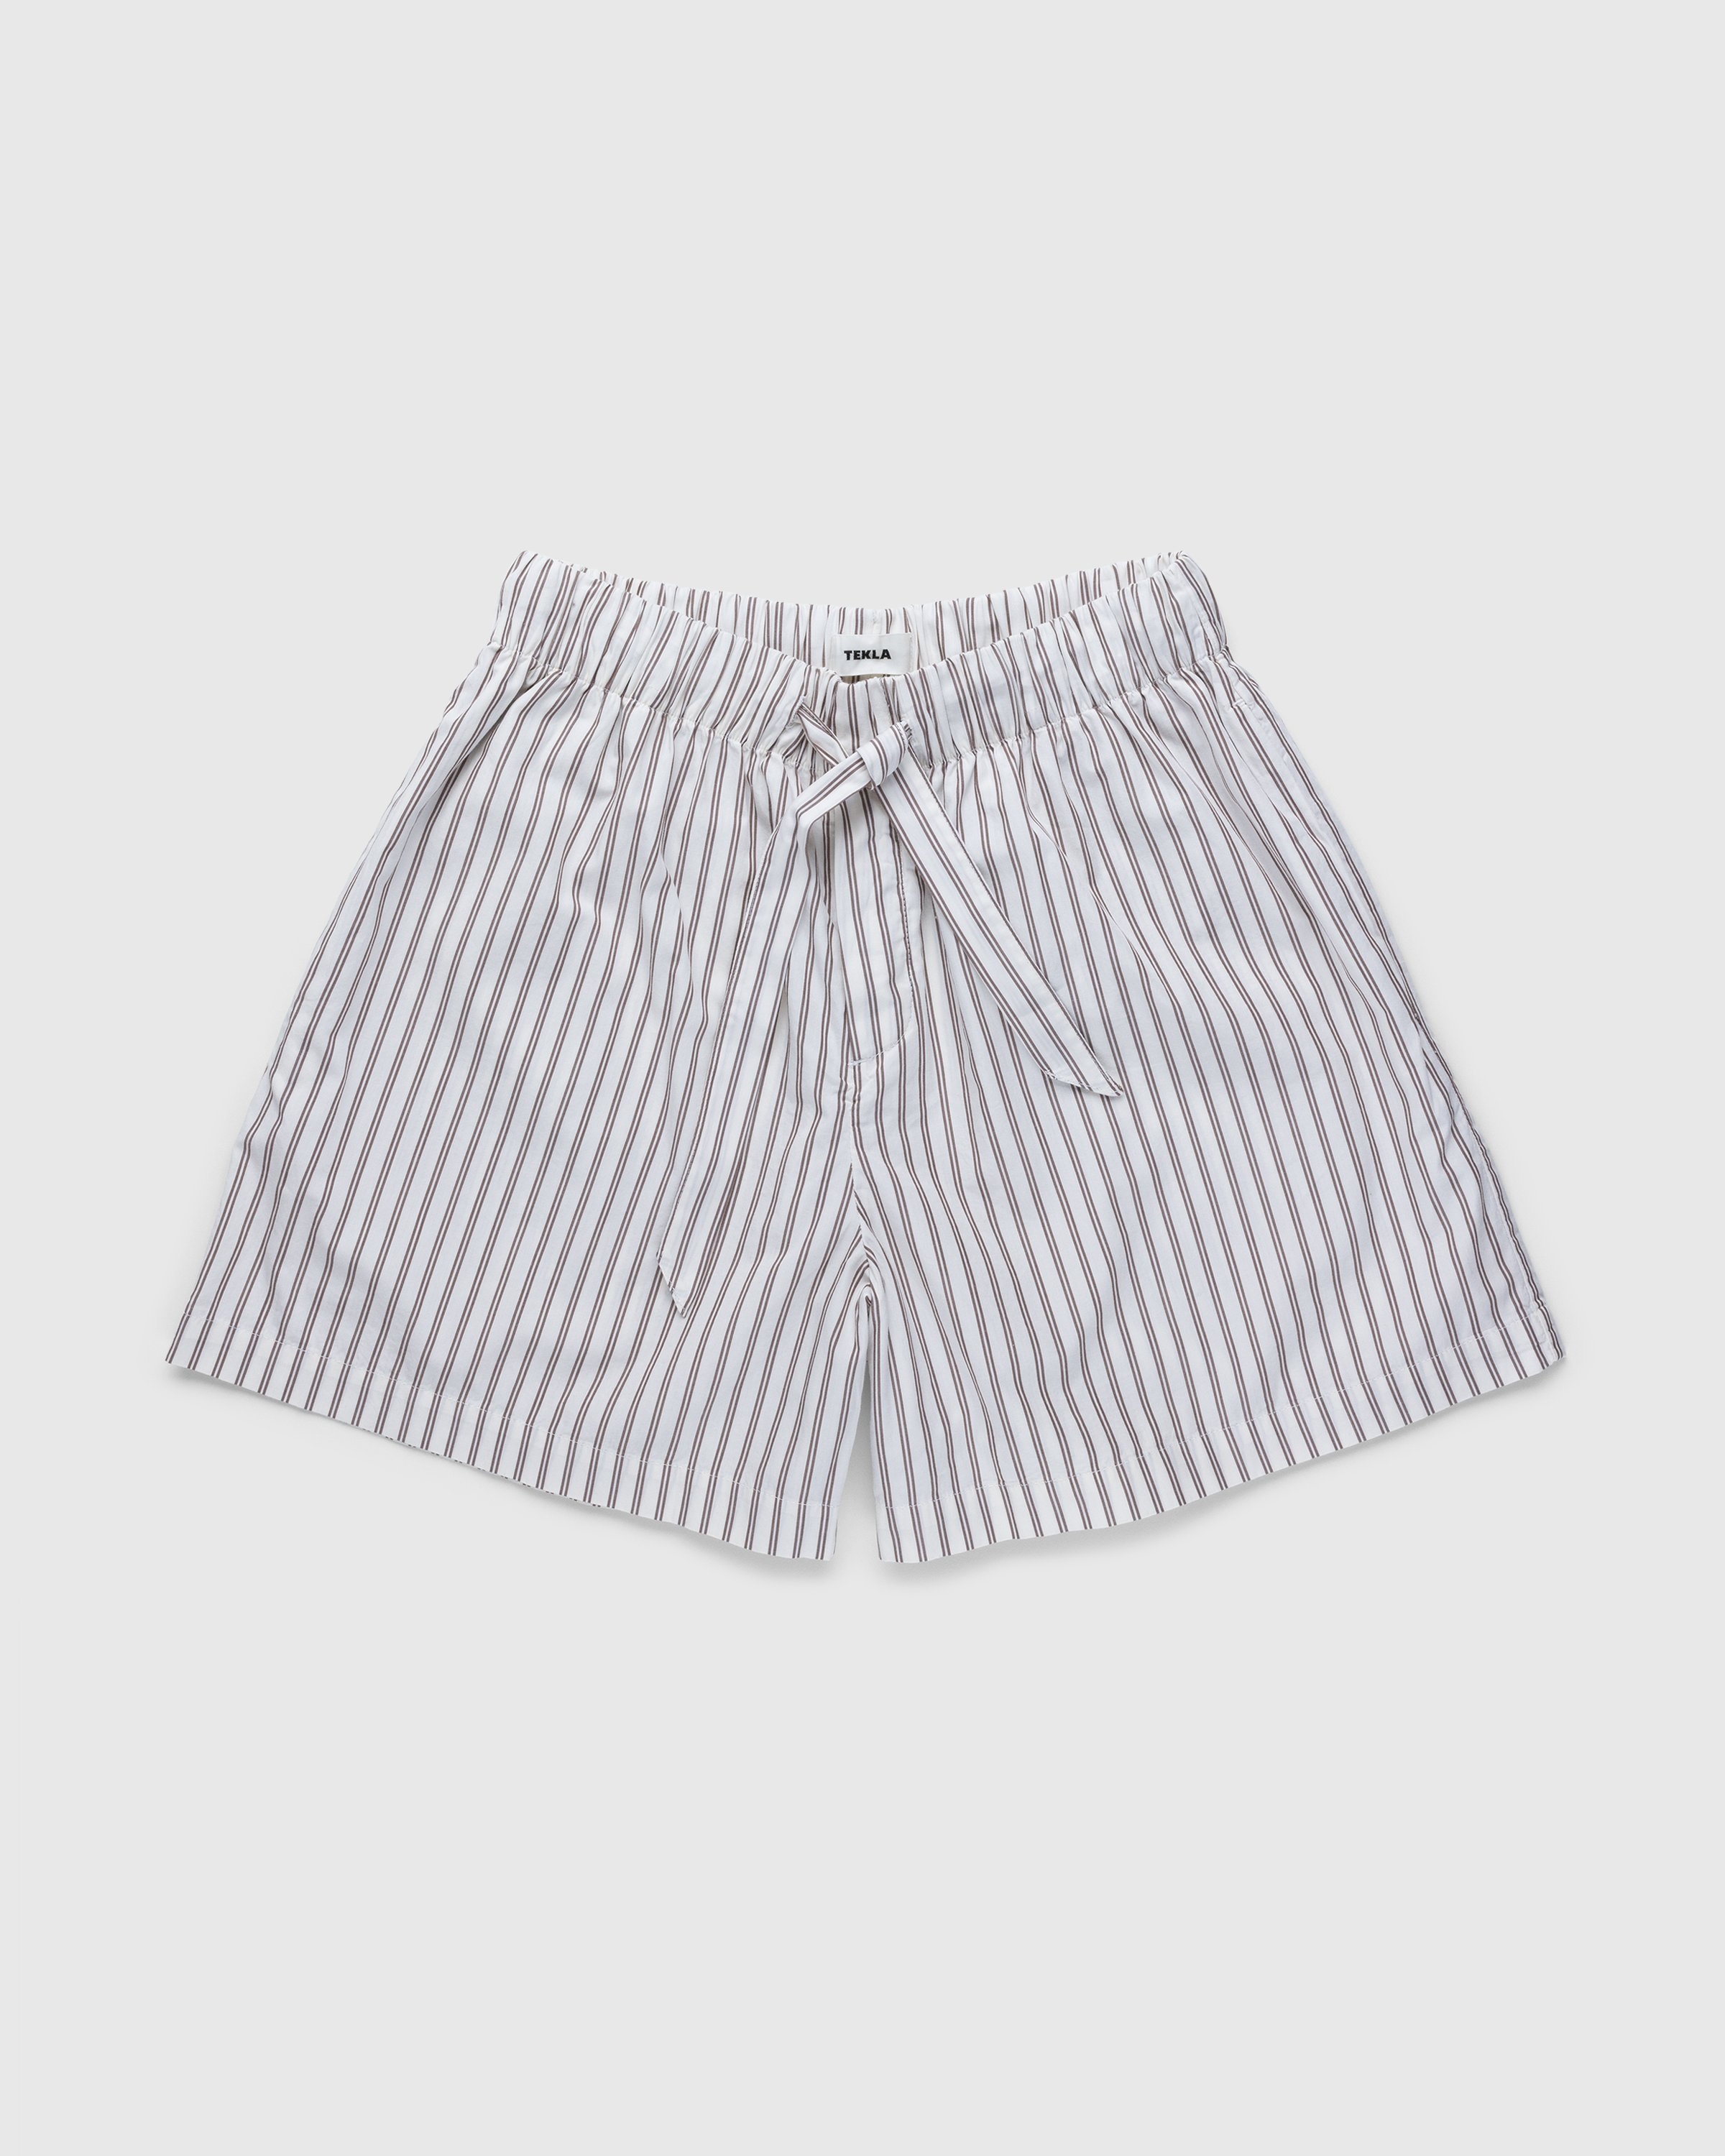 Tekla – Cotton Poplin Pyjamas Shorts Hopper Stripes | Highsnobiety Shop